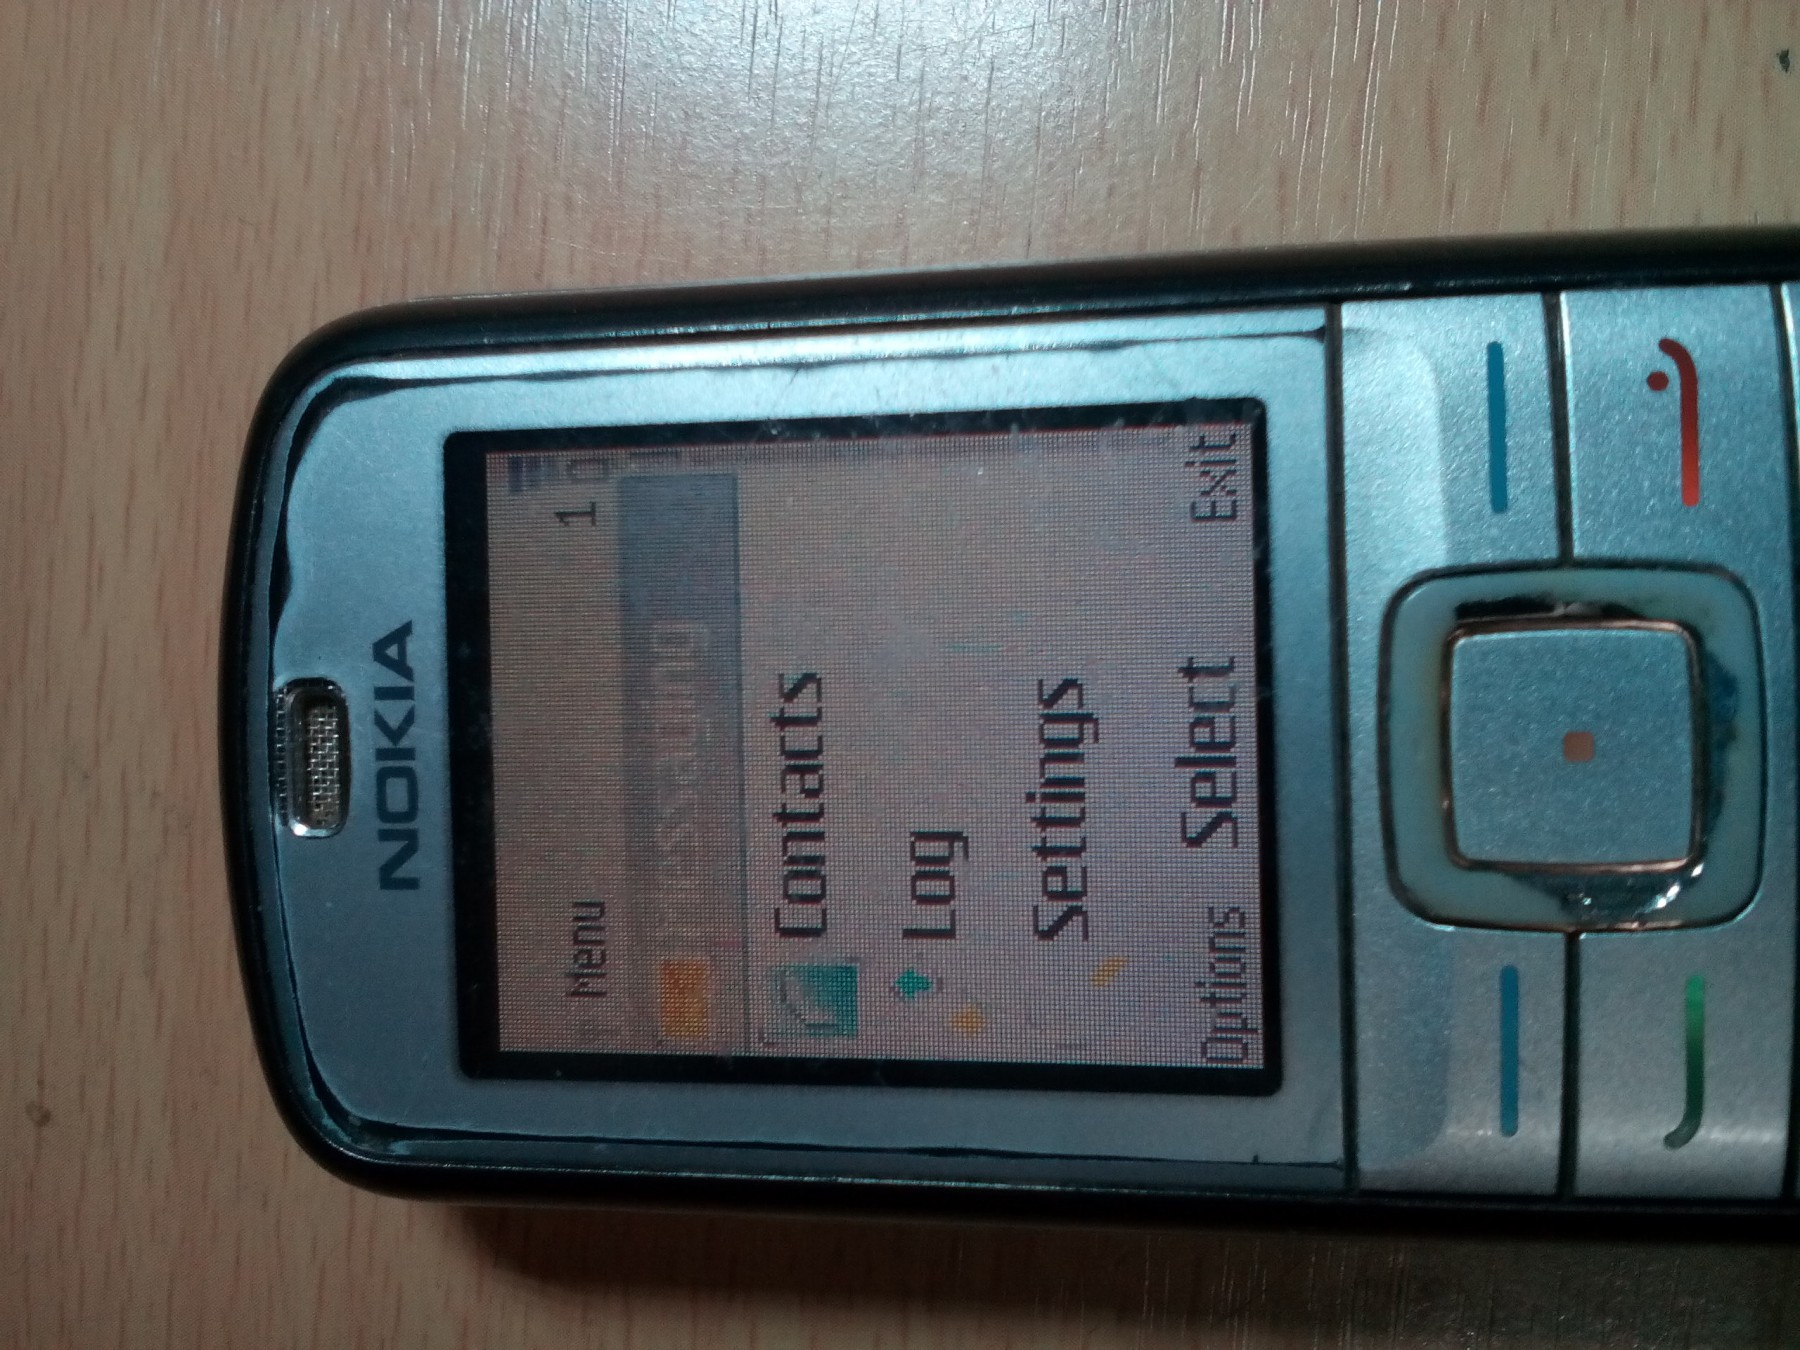 Mobilni telefon Nokia 6070 - Kupindo.com (44554333)